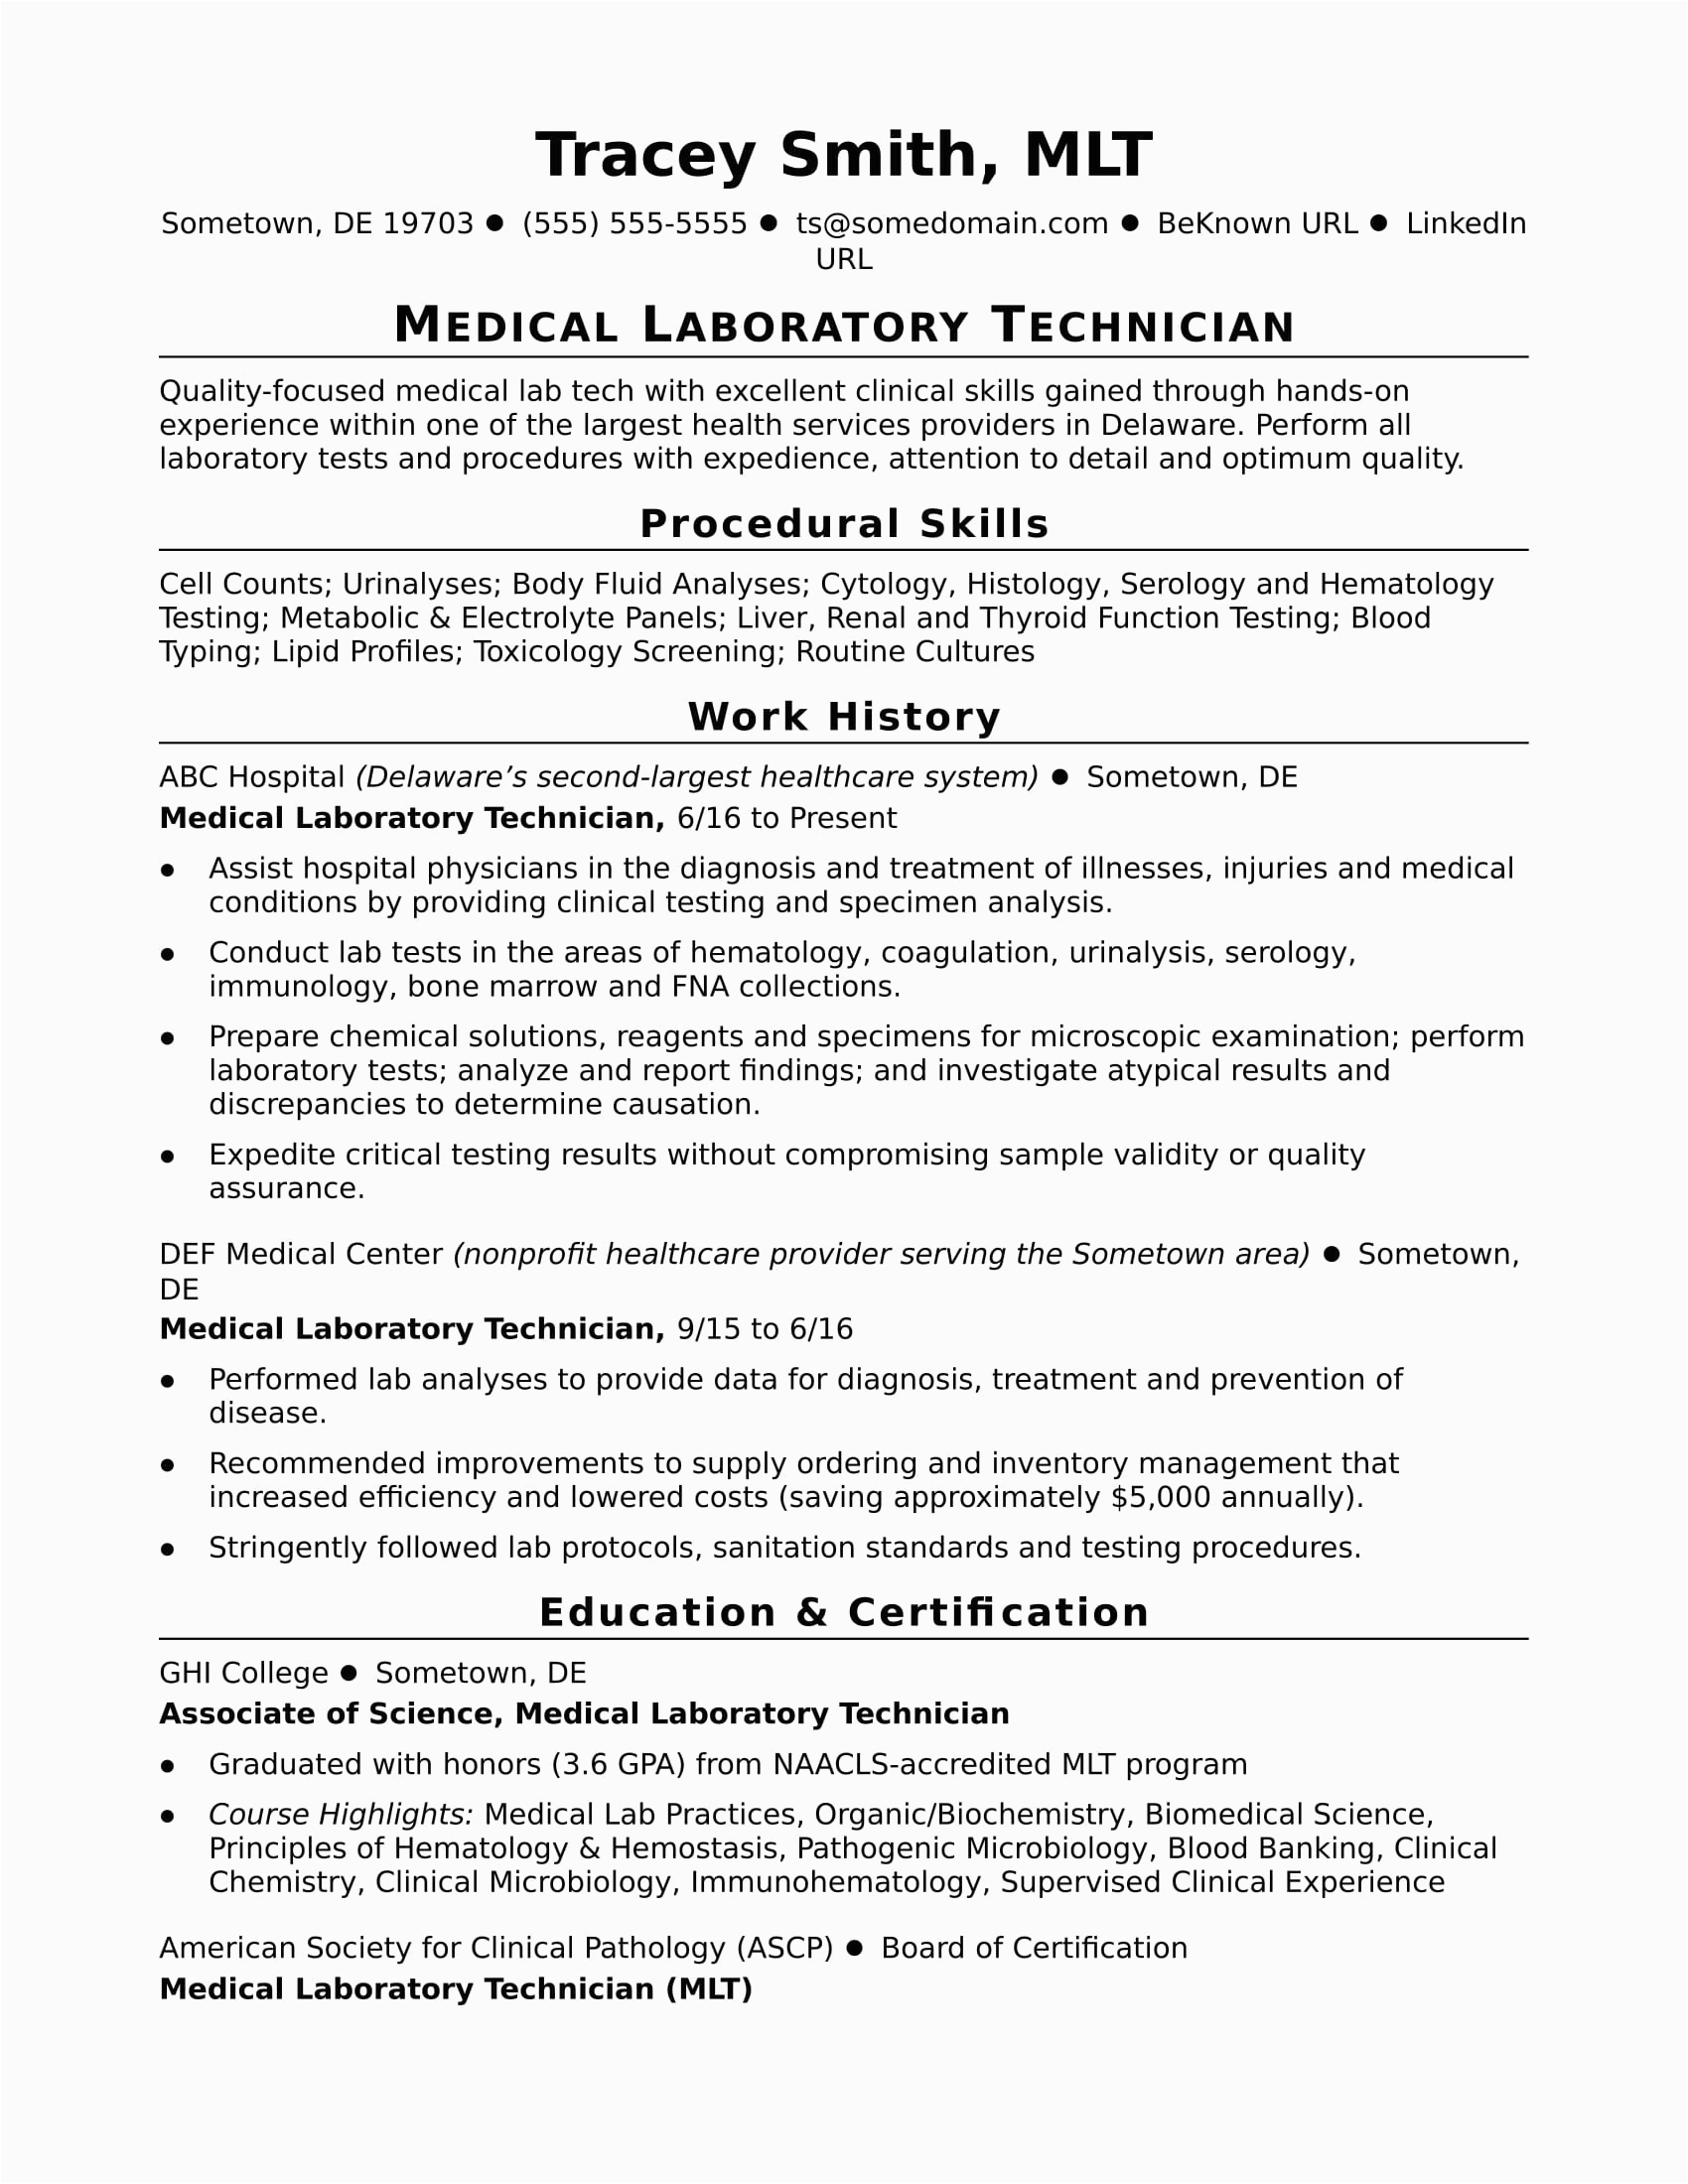 Sample Resume for Medical Laboratory Technician Student Cv Template for Medical Laboratory Technician Lab Technician Resume